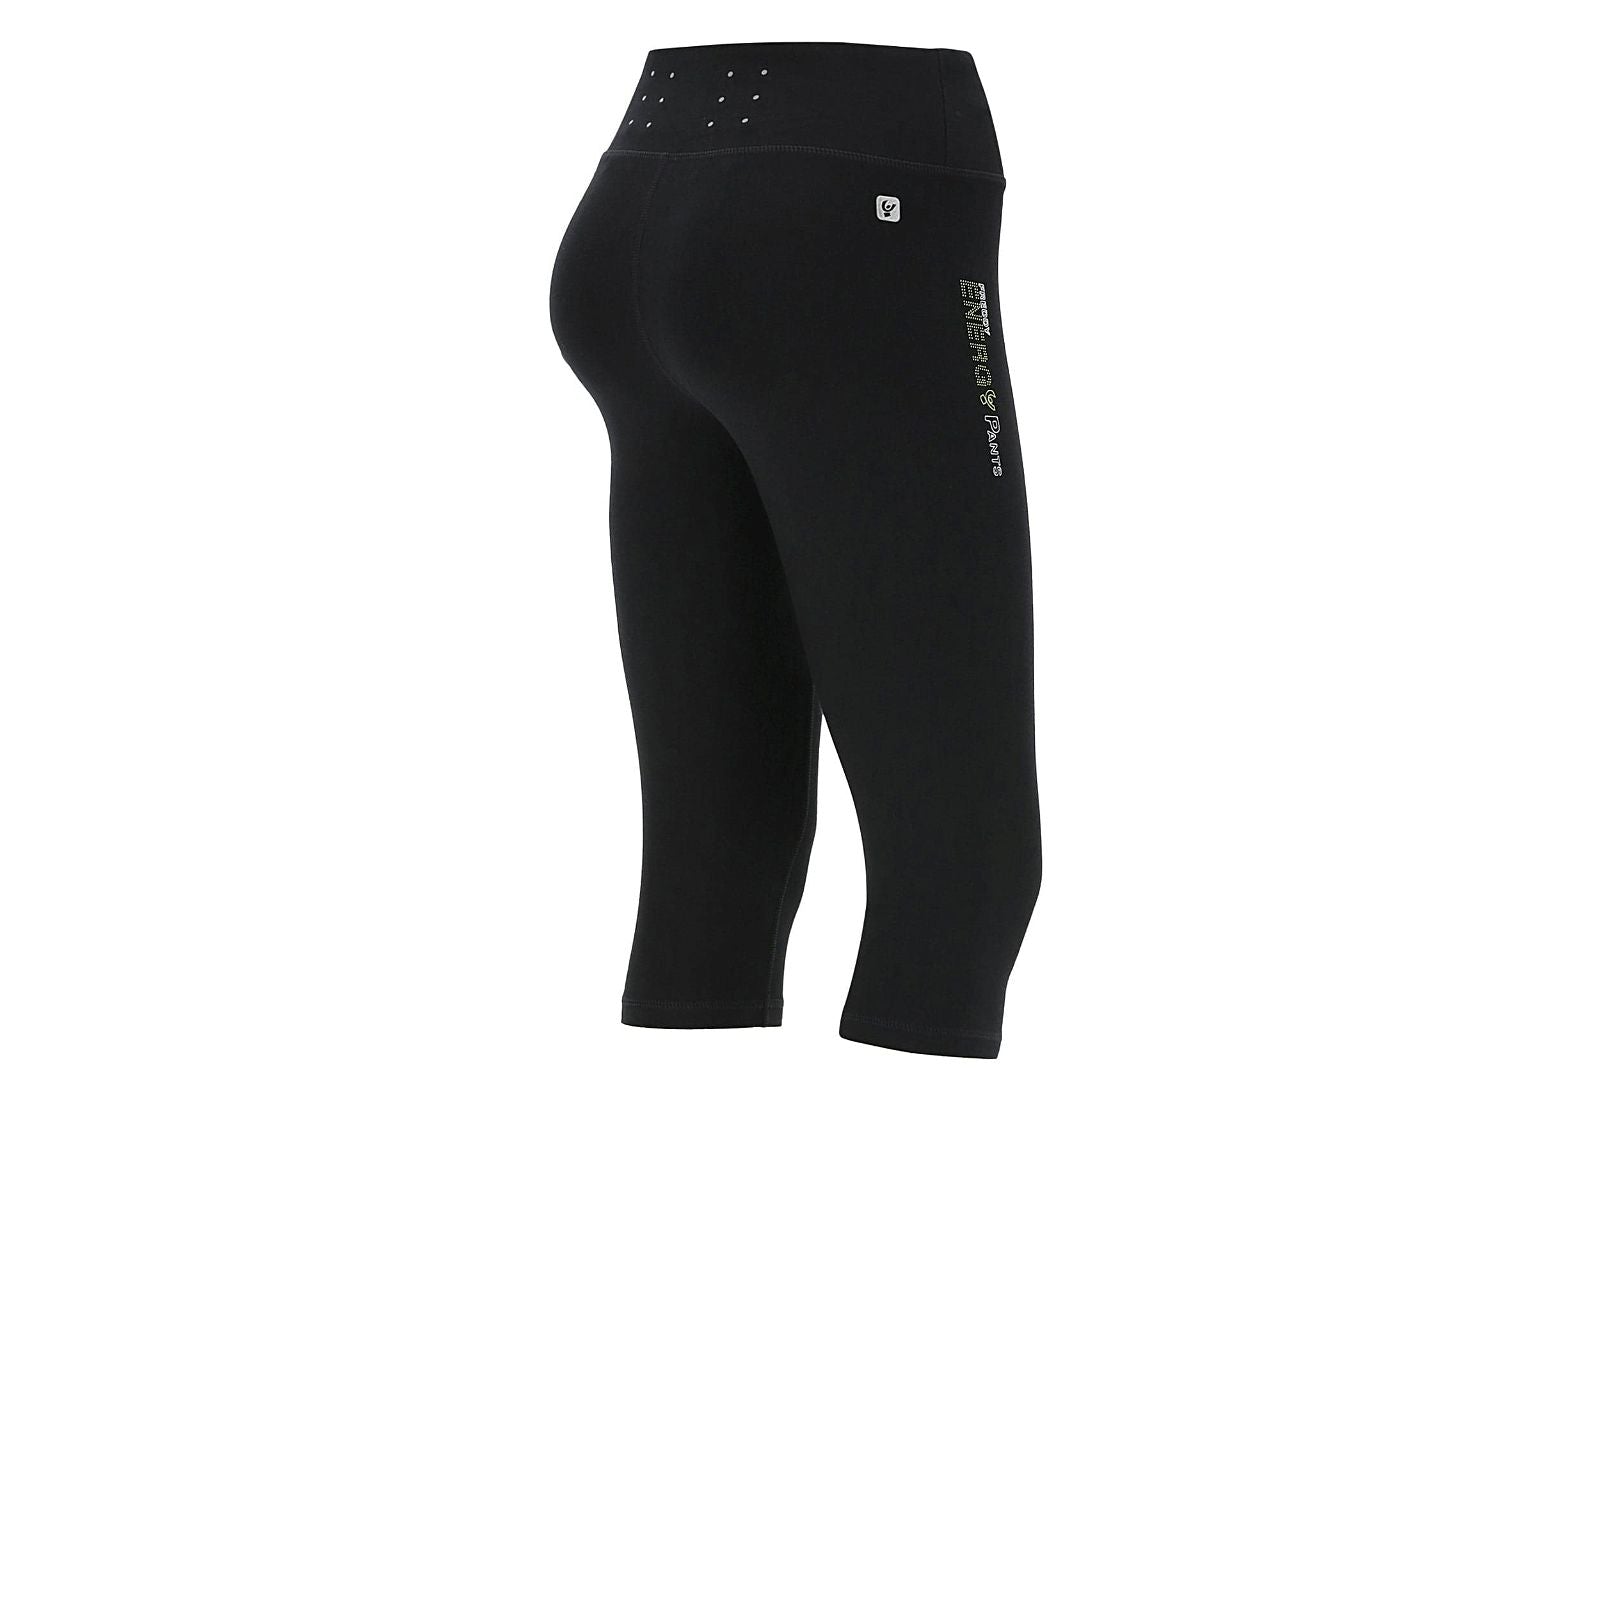 Diwo Energy Pants® - High Waisted - Capri Length - Black + Reflective Details 1